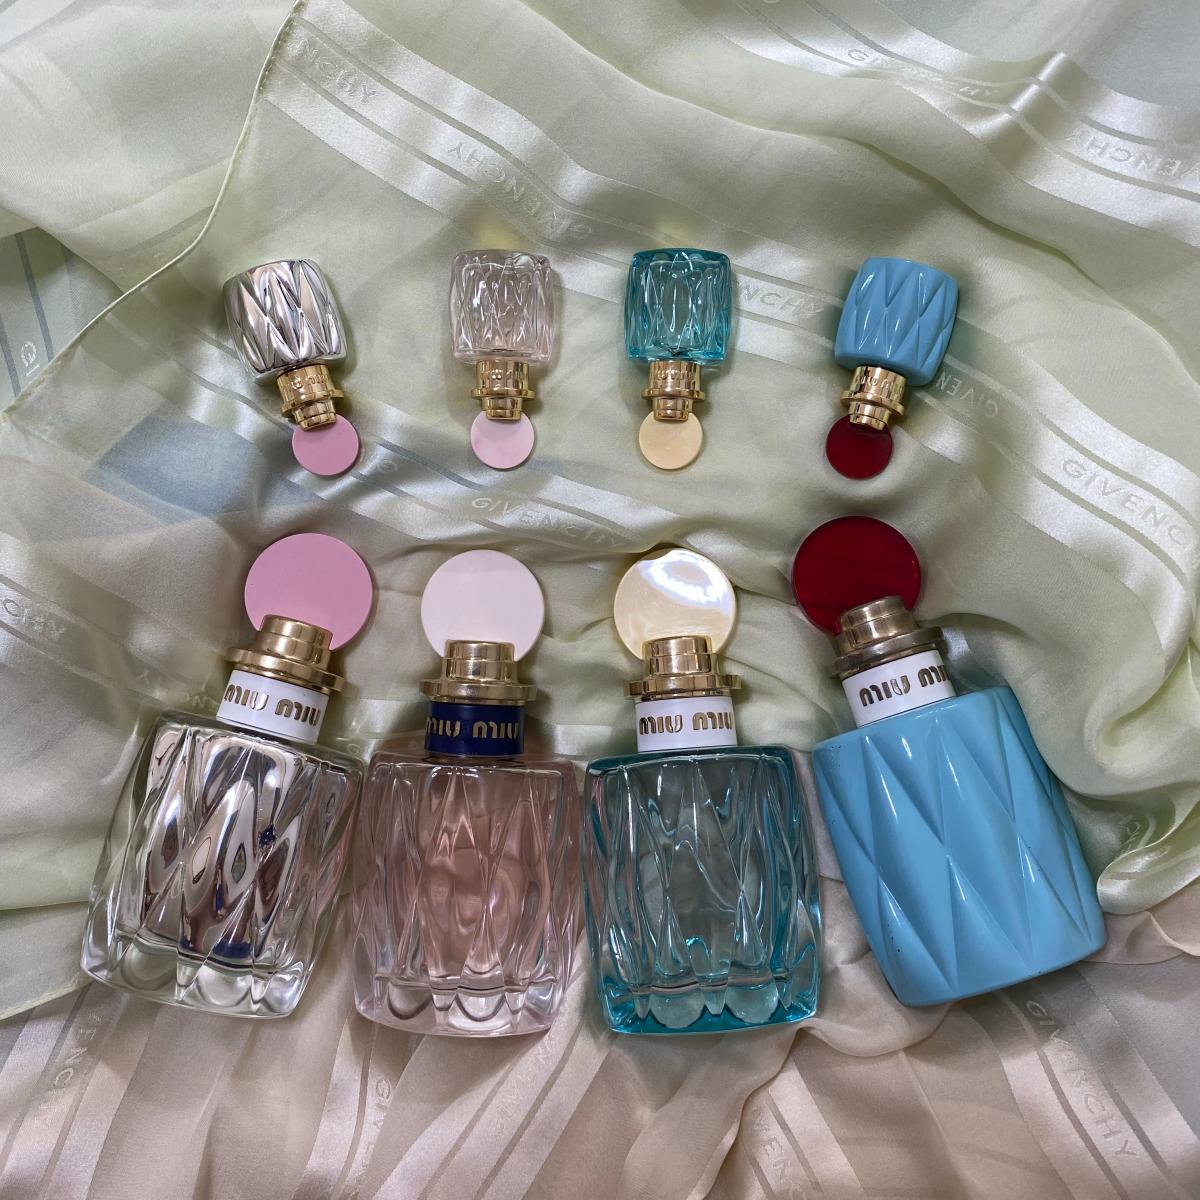 Miu Miu Miu Miu аромат — аромат для женщин 2015